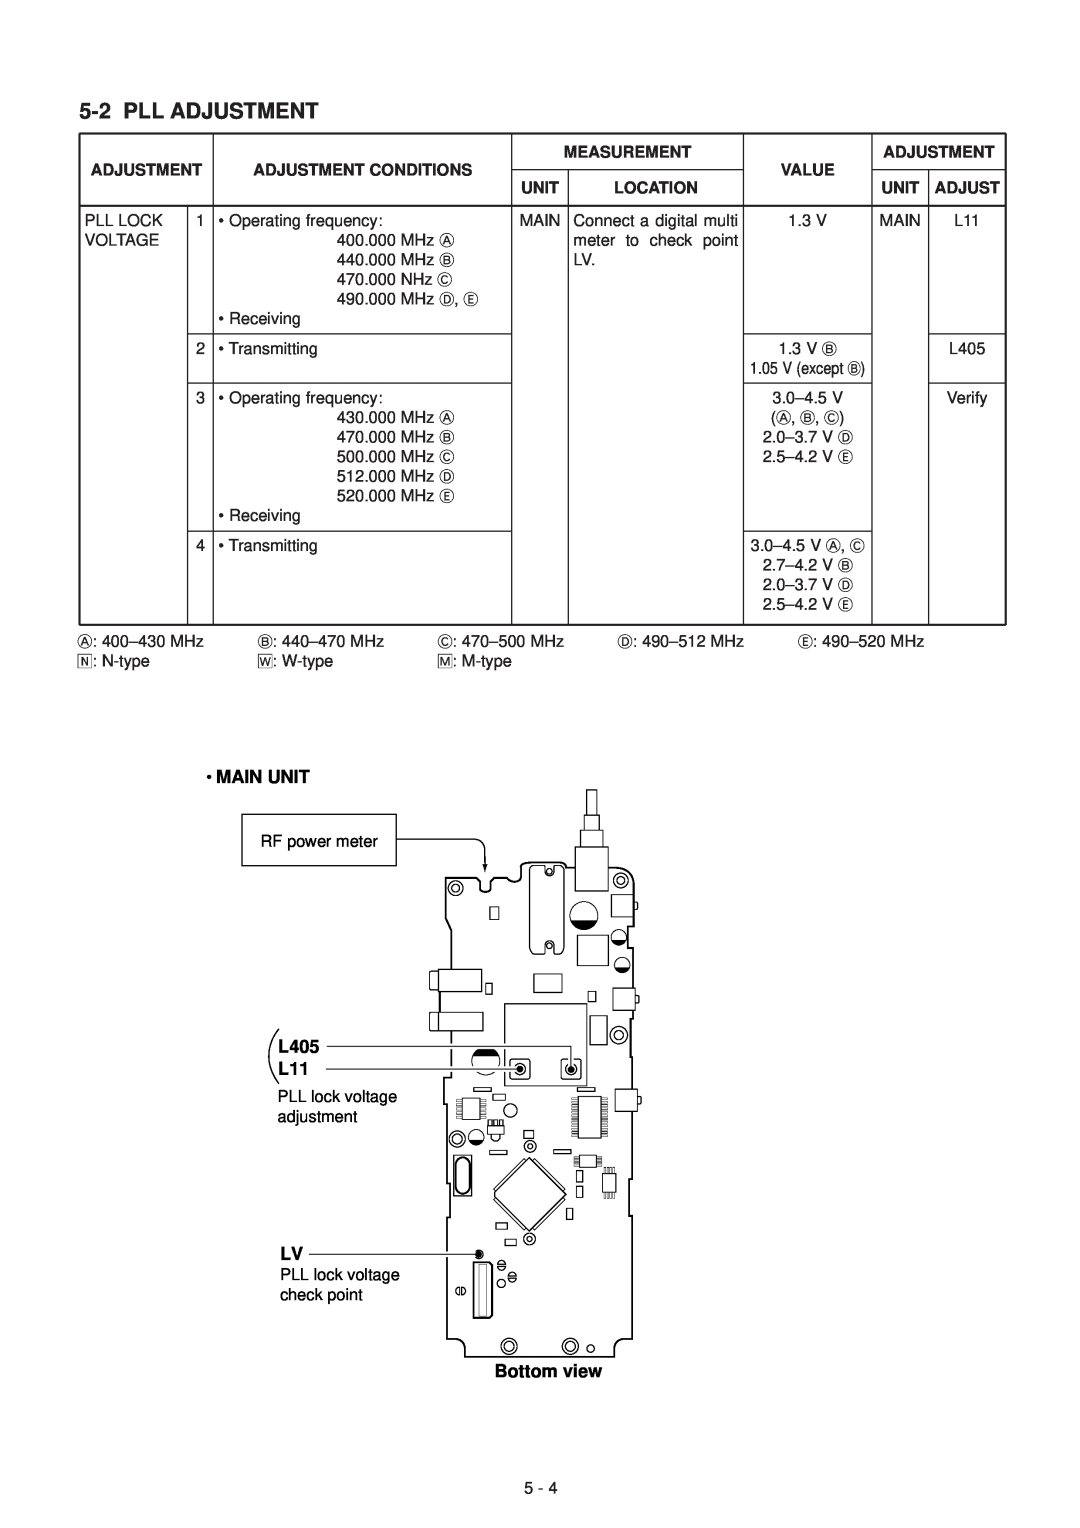 Icom IC-F3GT Pll Adjustment, Main Unit, L405 L11, Bottom view, Adjustment Conditions, Measurement, Value, Location 